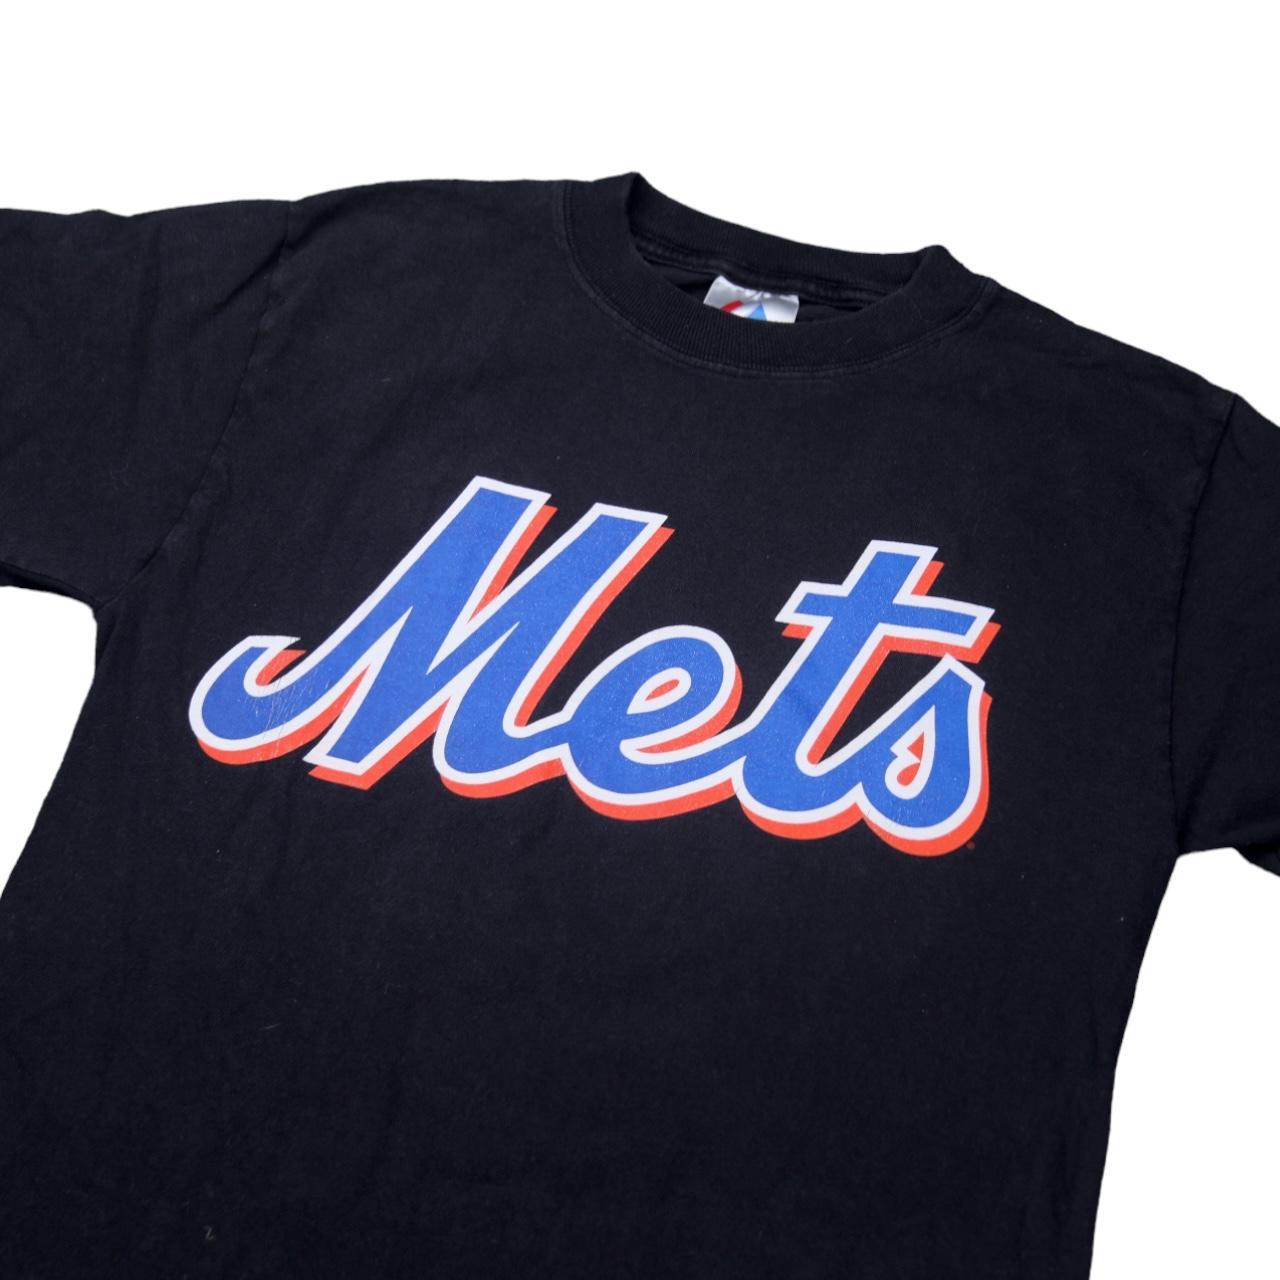 David Wright New York Mets baseball Majestic boys black jersey